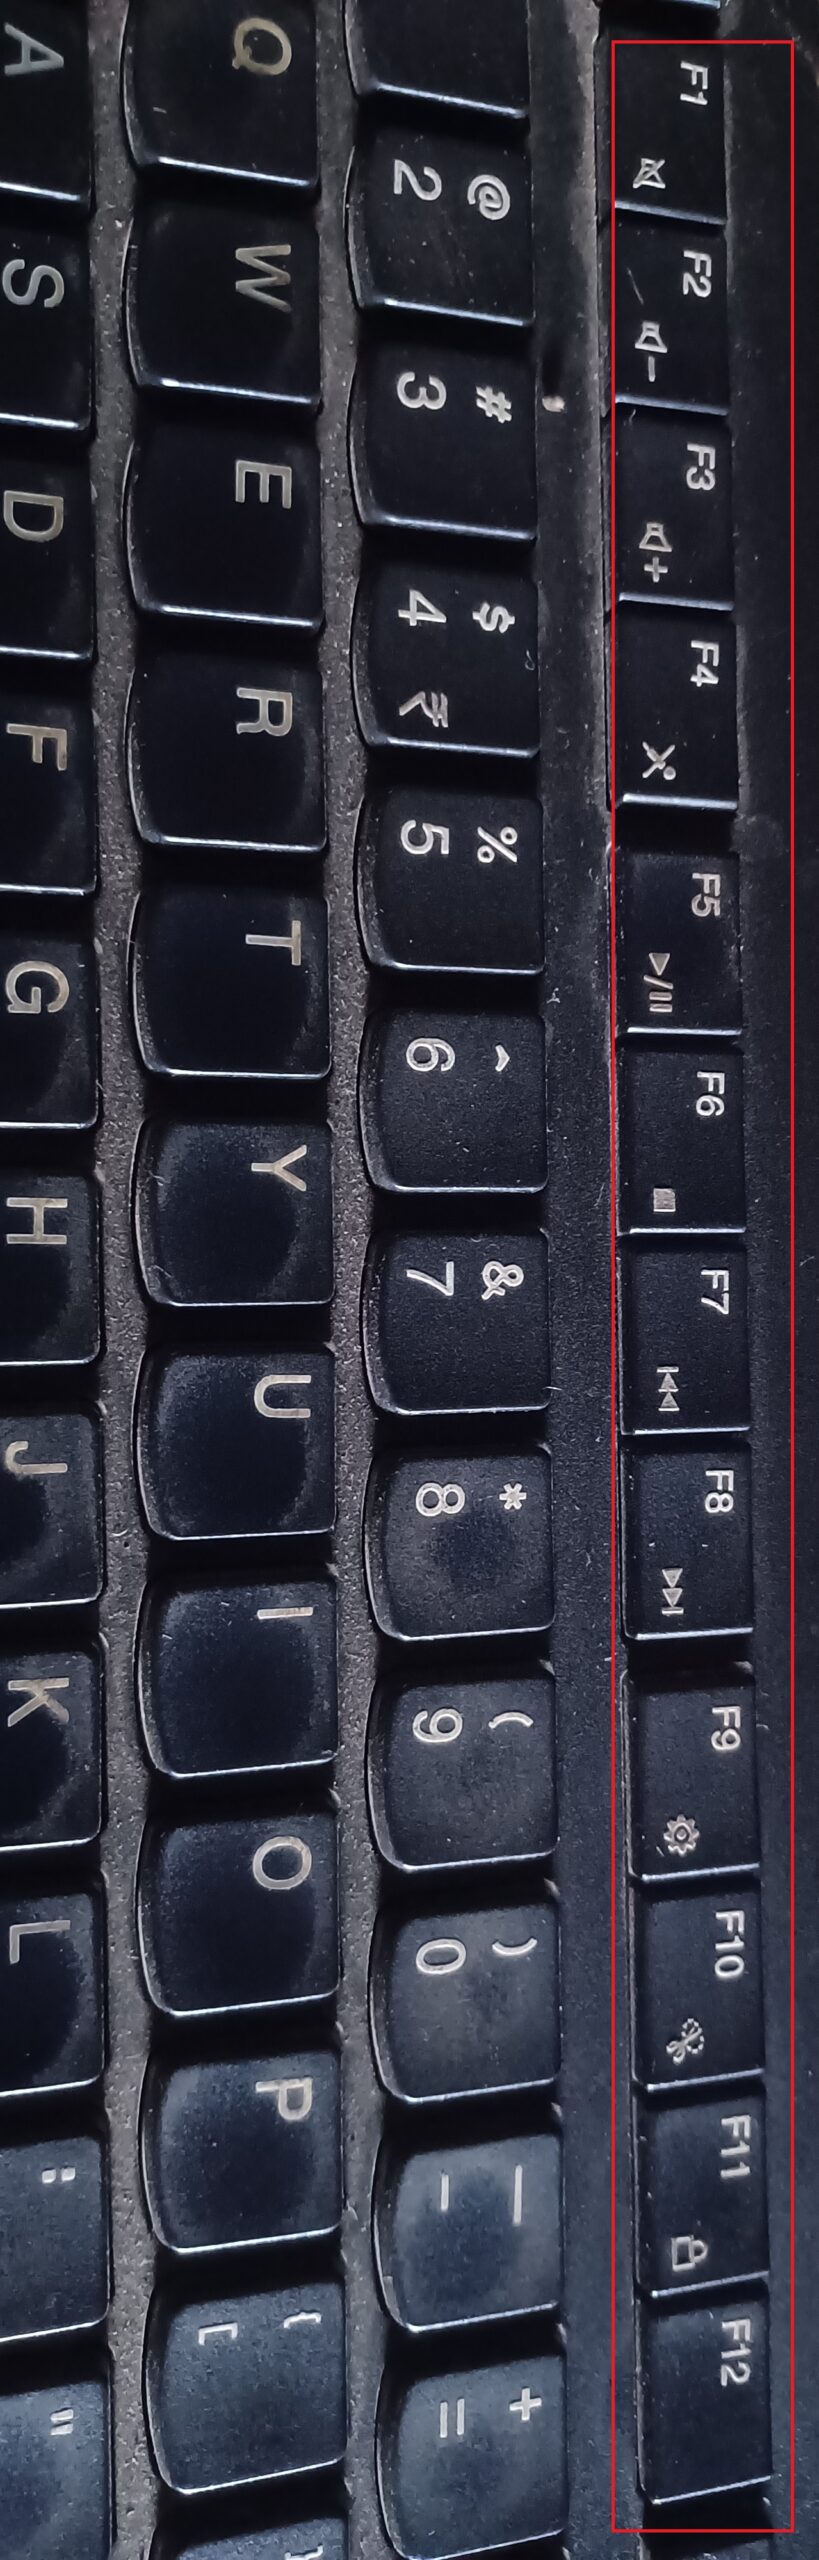 Computer Keyboard F1 to F12 Function keys